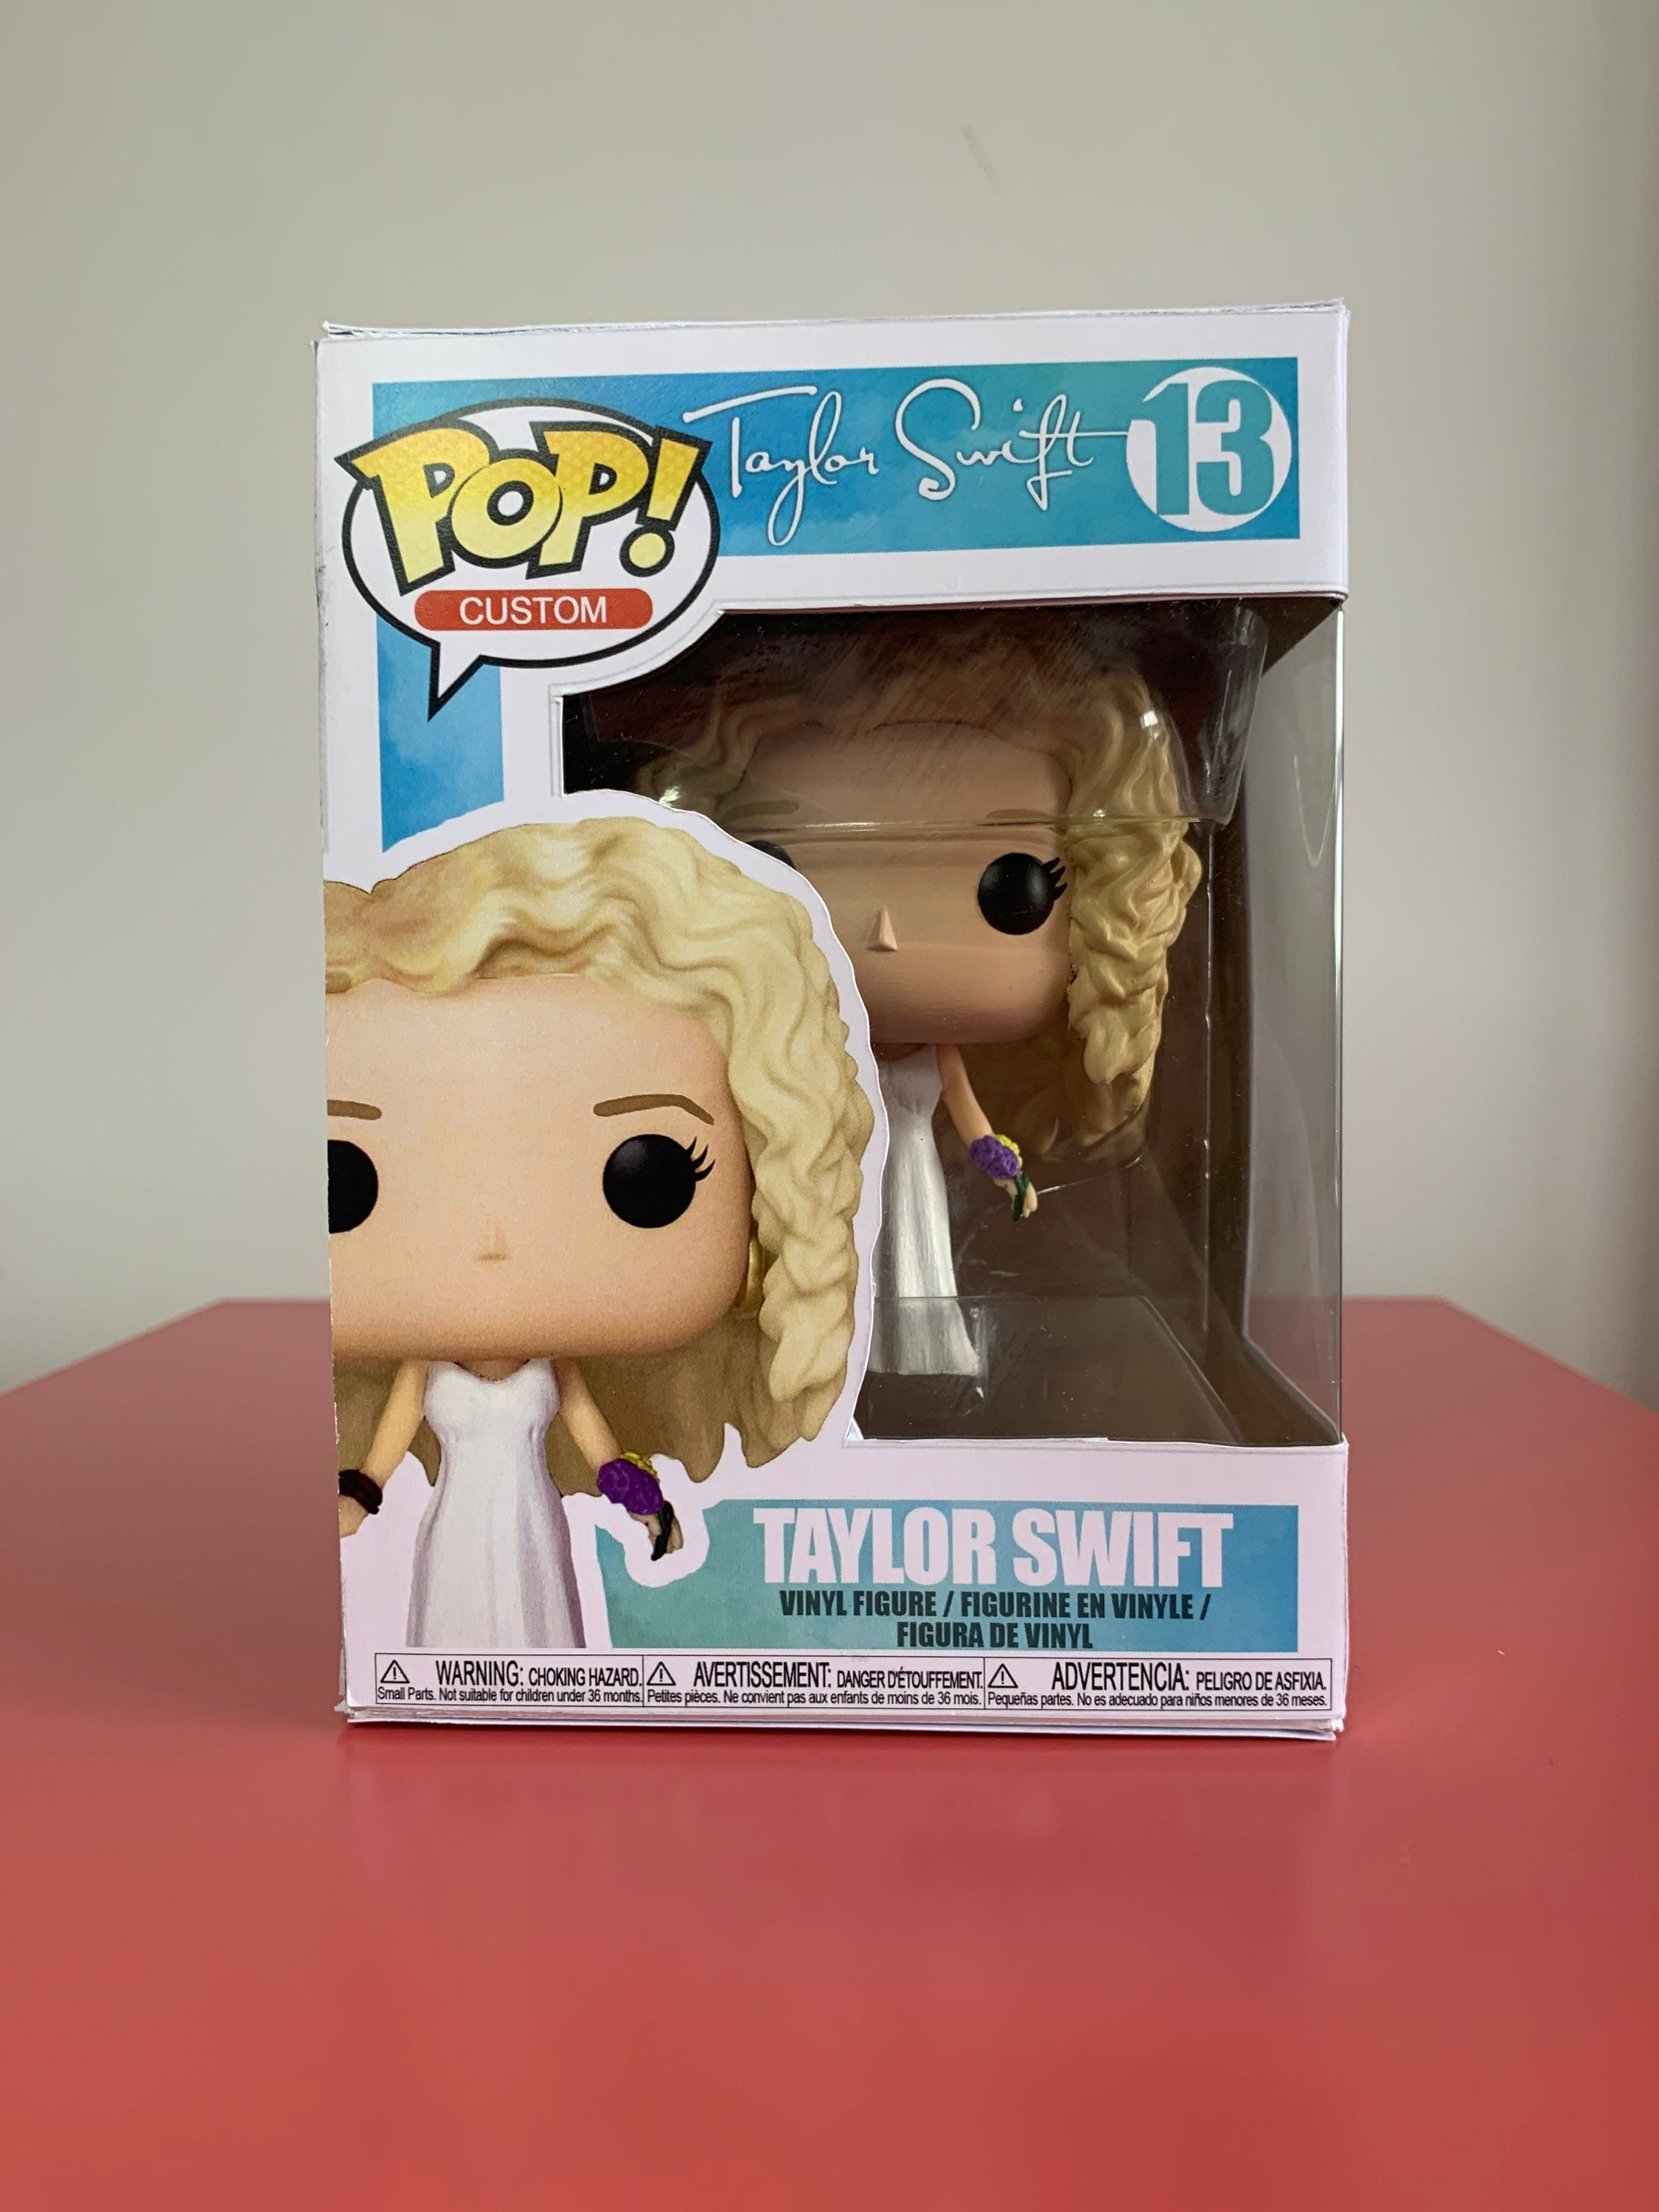 Custom Taylor Swift Funko Pop Figure with Album Art Box